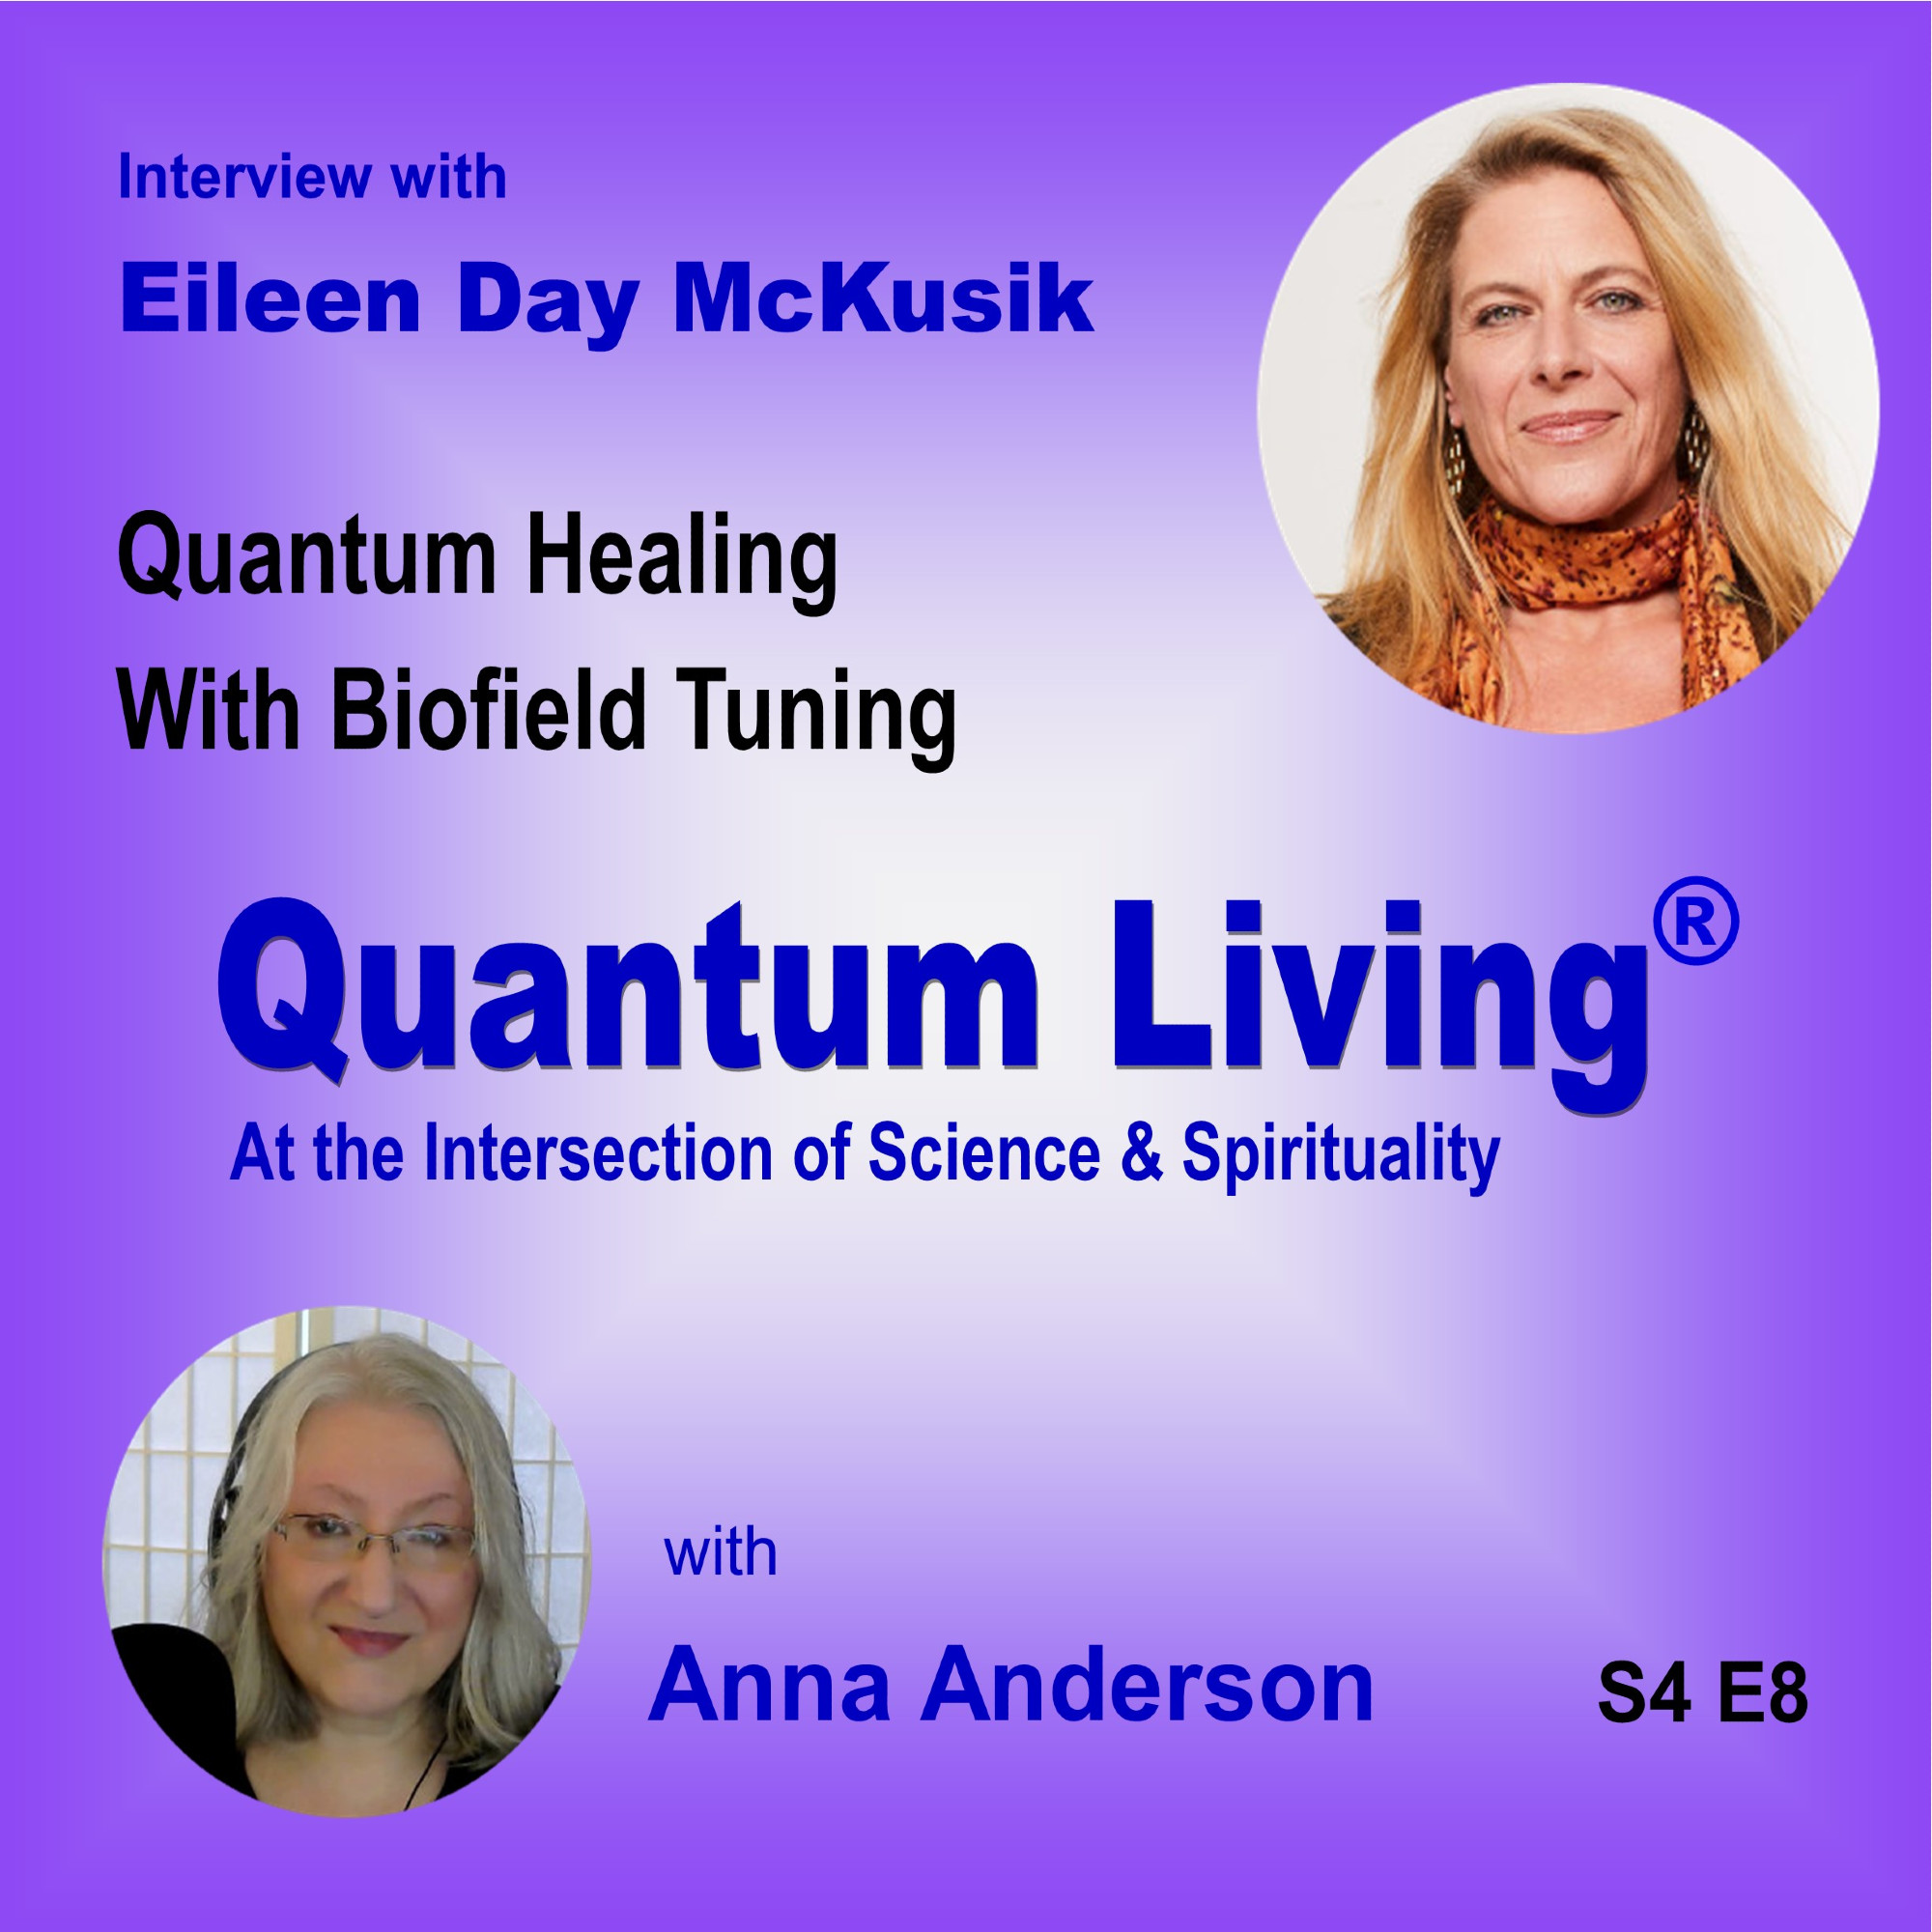 S4 E8: Quantum Healing With Biofield Tuning